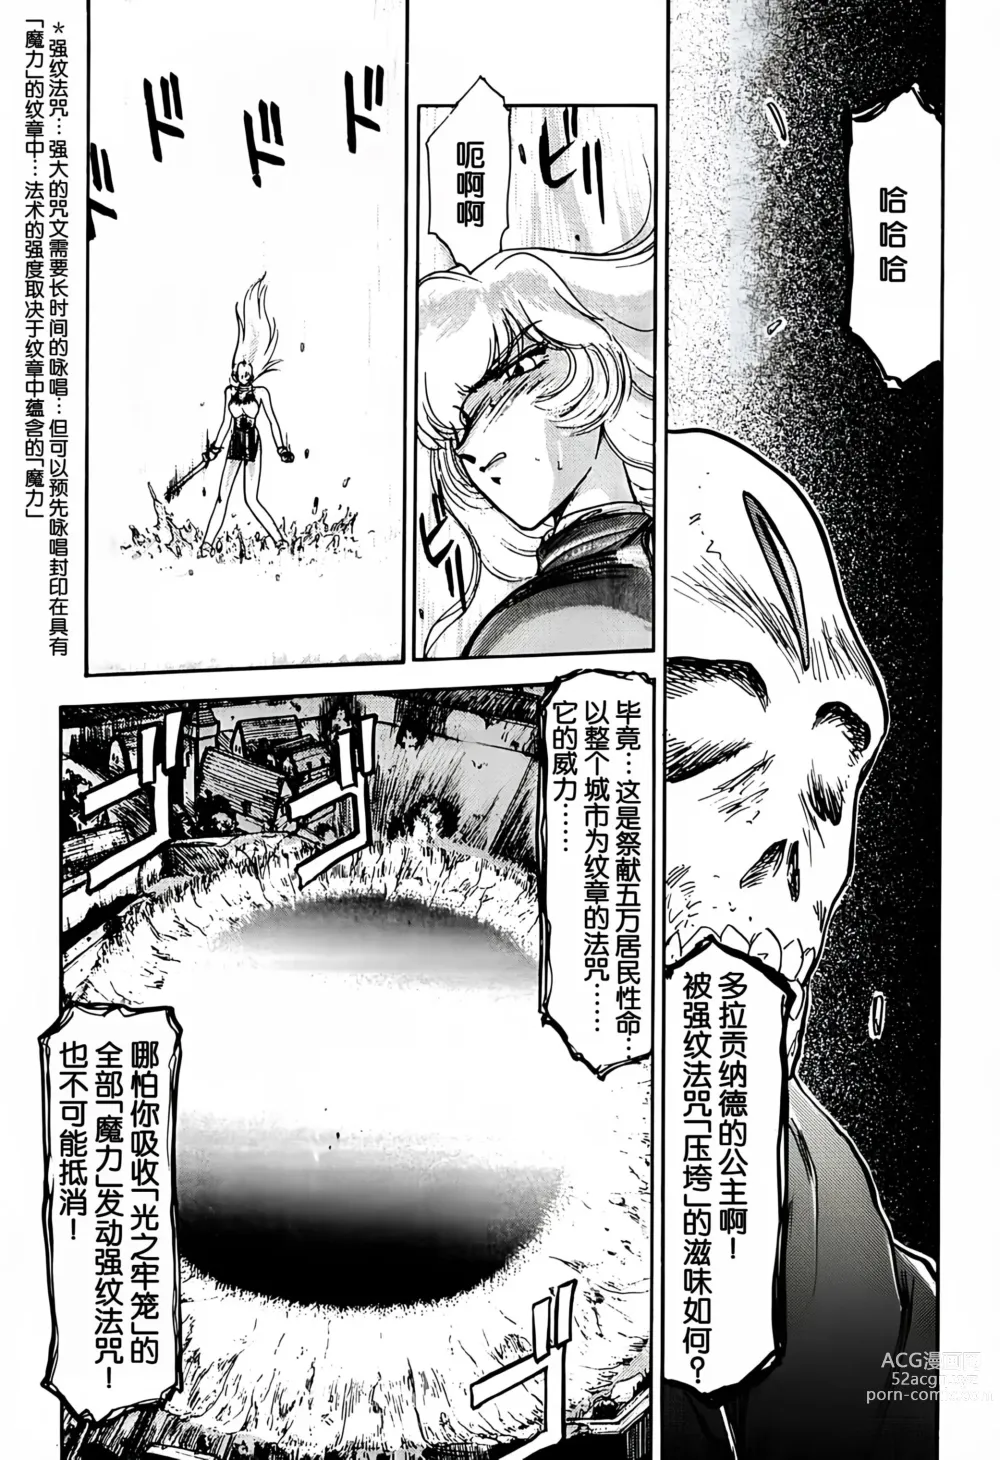 Page 4 of doujinshi Nise DRAGON BLOOD! 1.